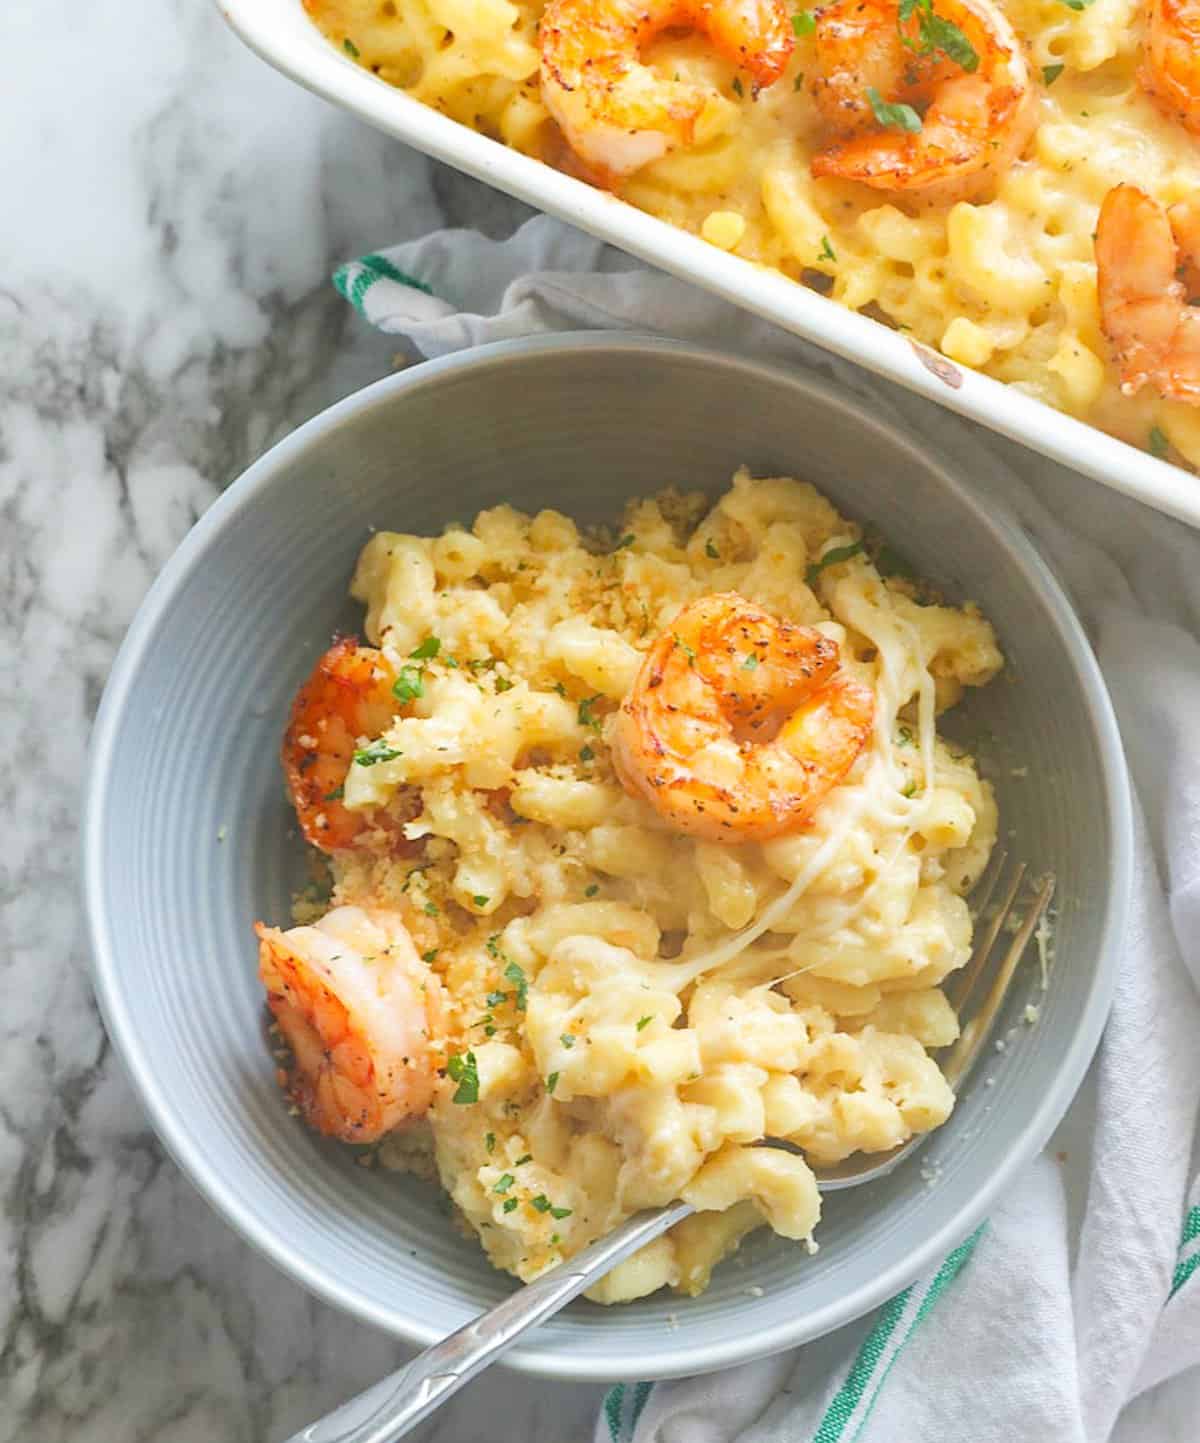 Shrimp Mac and Cheese Recipe - Immaculate Bites